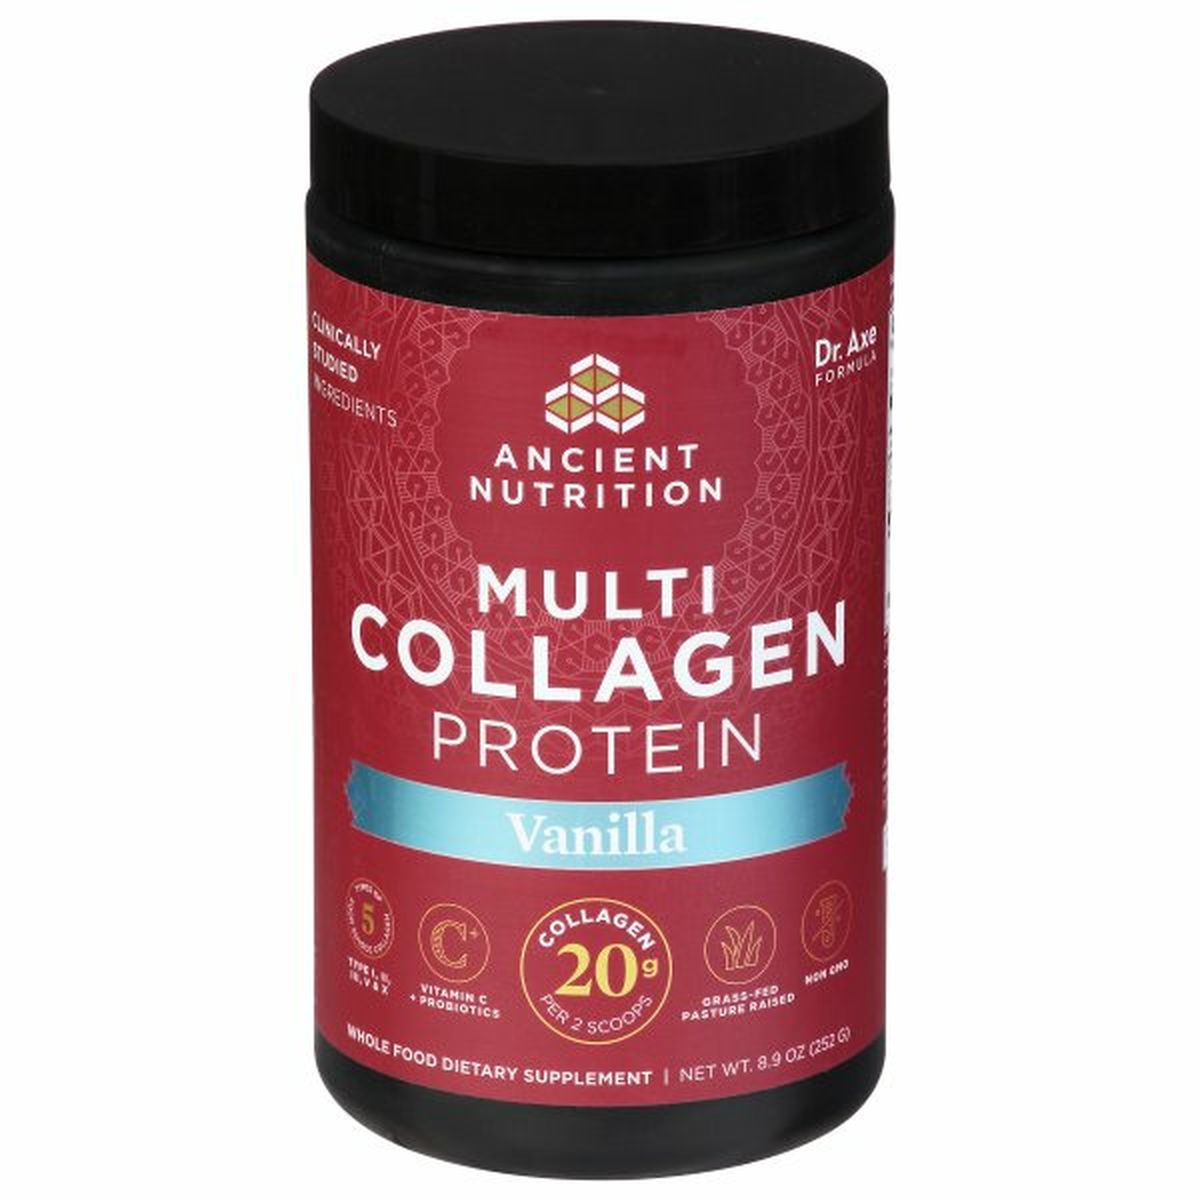 Calories in Ancient Nutrition Multi Collagen Protein, Vanilla